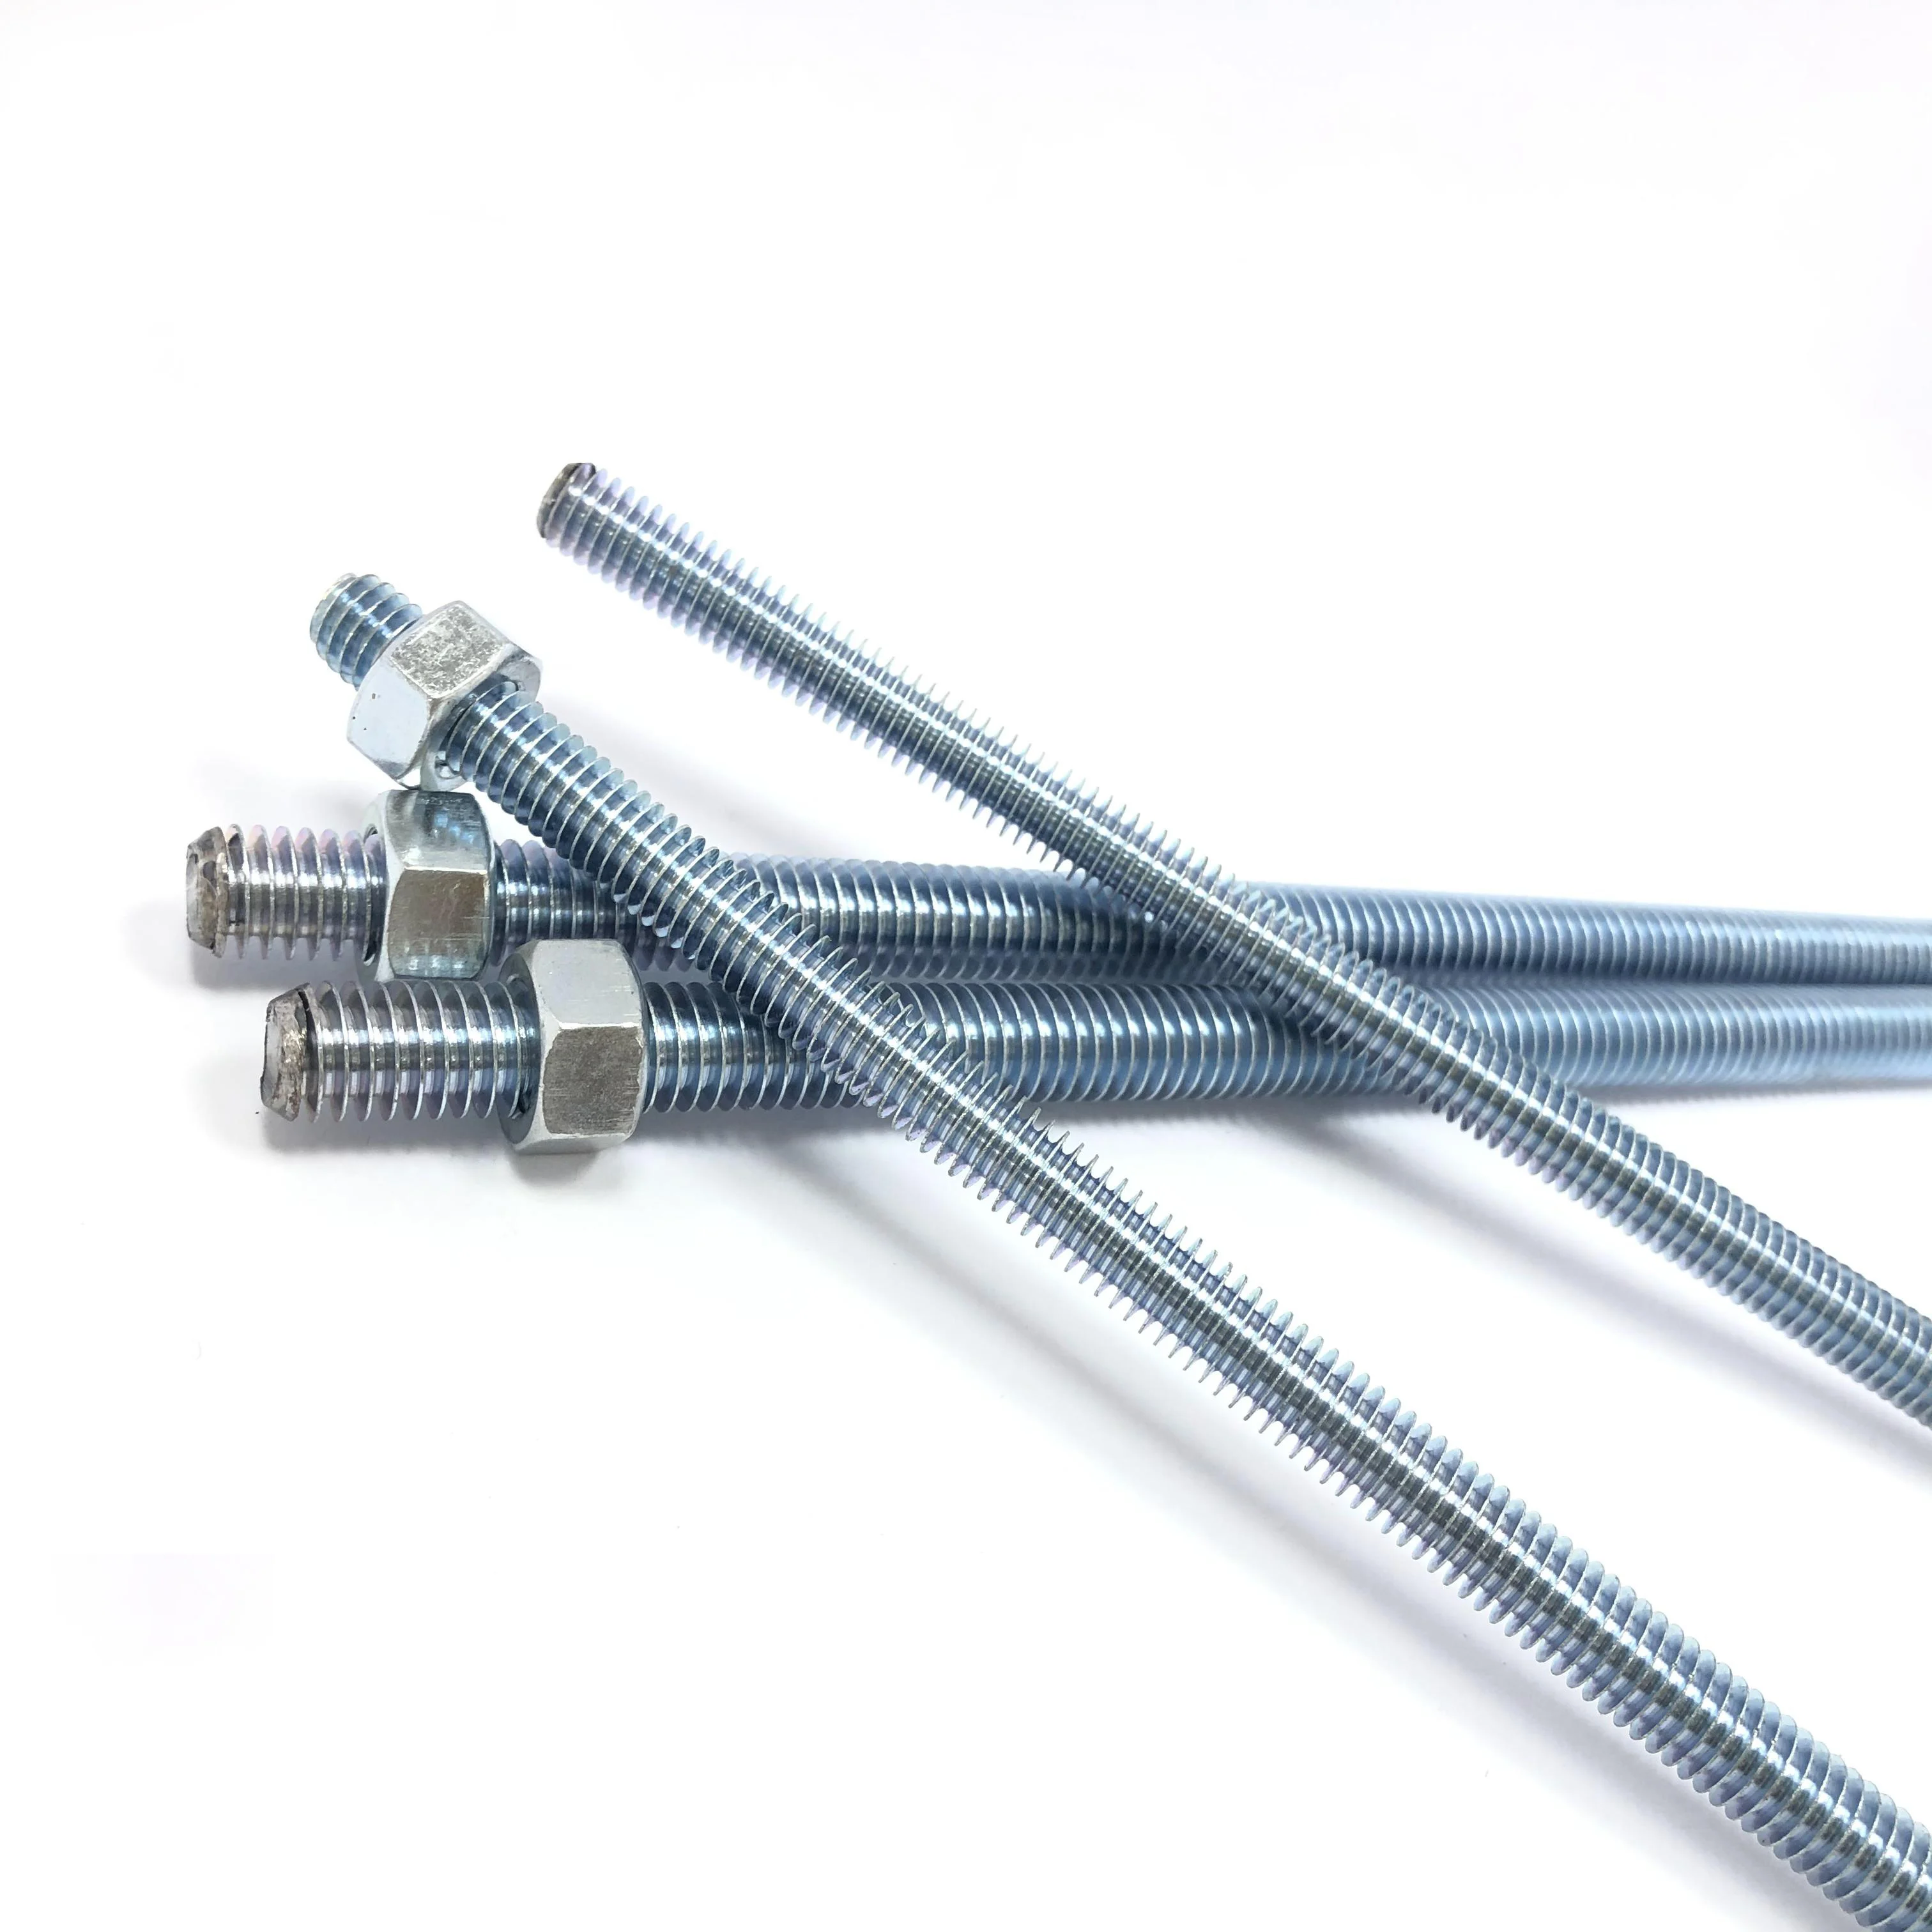 Metric DIN 975 M30-6 X 1m Metric Threaded Rod Trapezoidal Thread Steel 1 pcs 